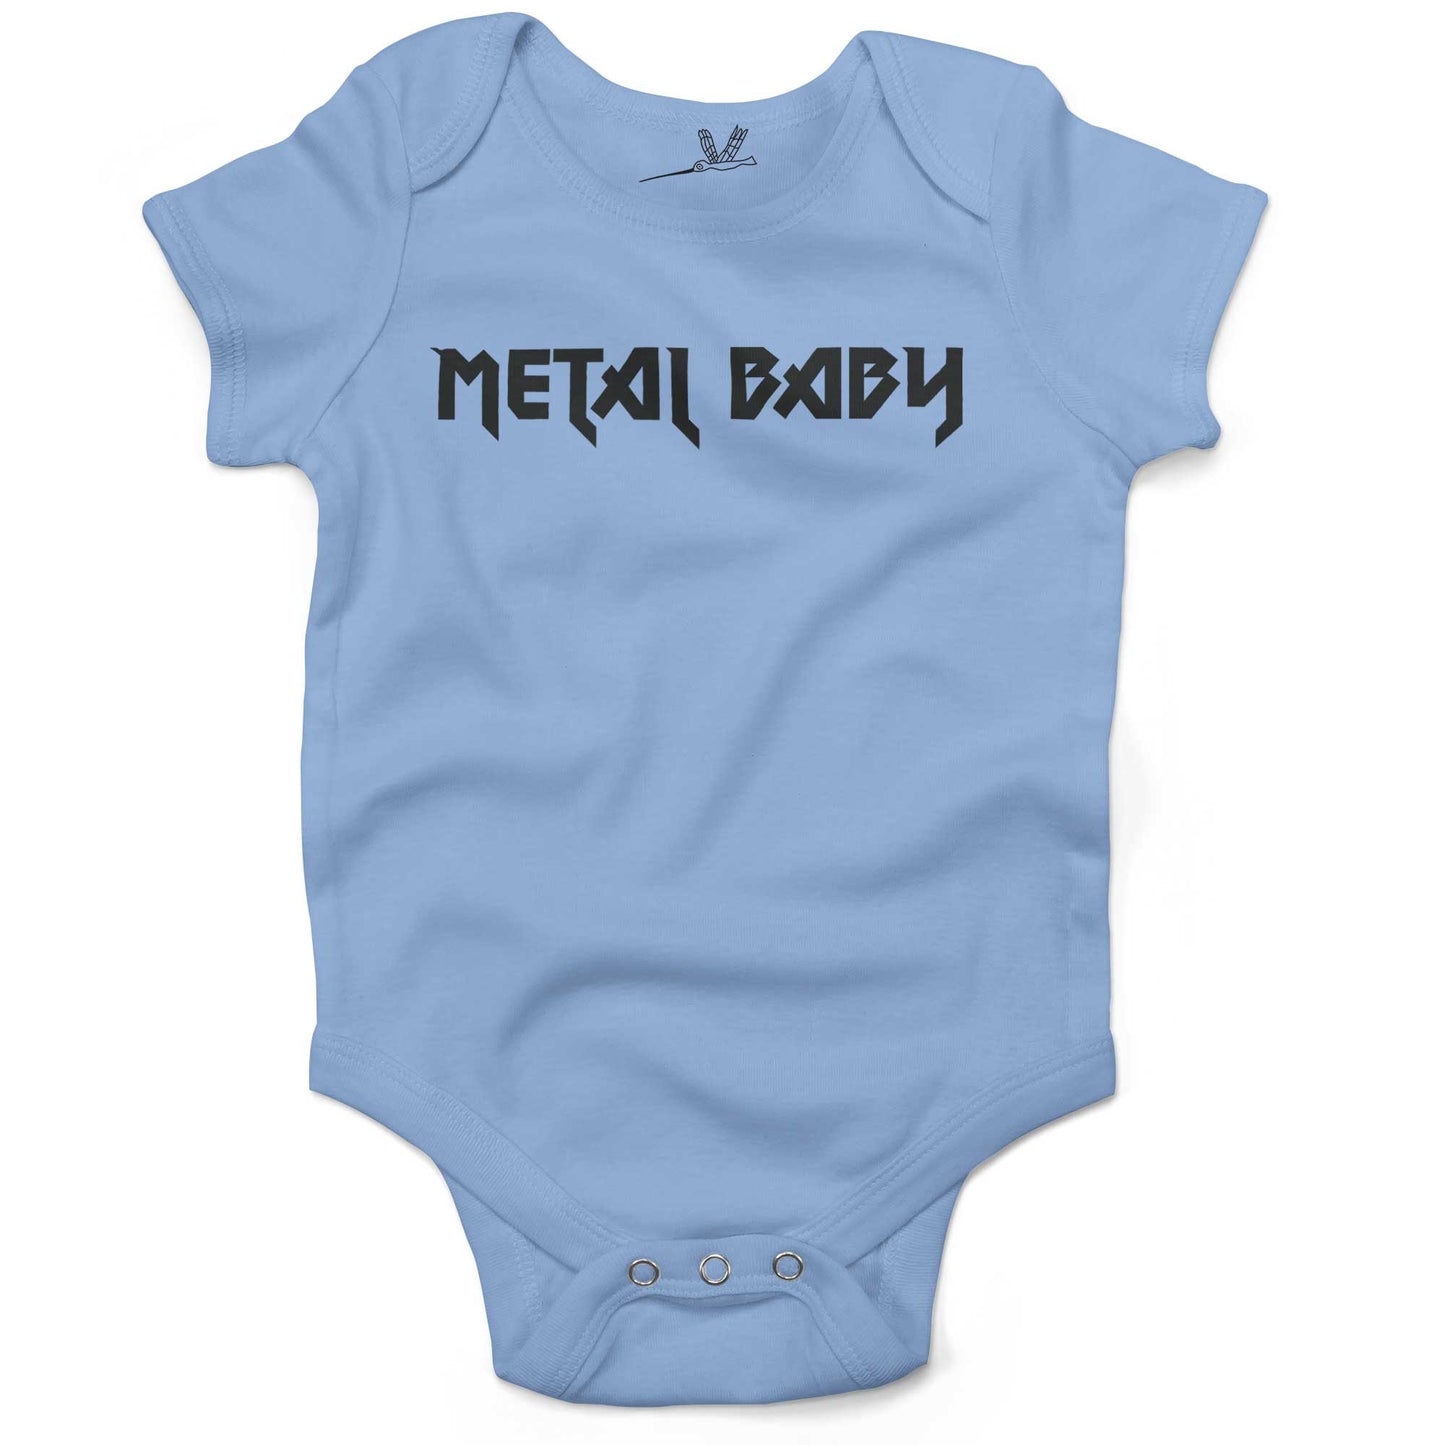 Metal Baby Infant Bodysuit or Raglan Baby Tee-Organic Baby Blue-3-6 months